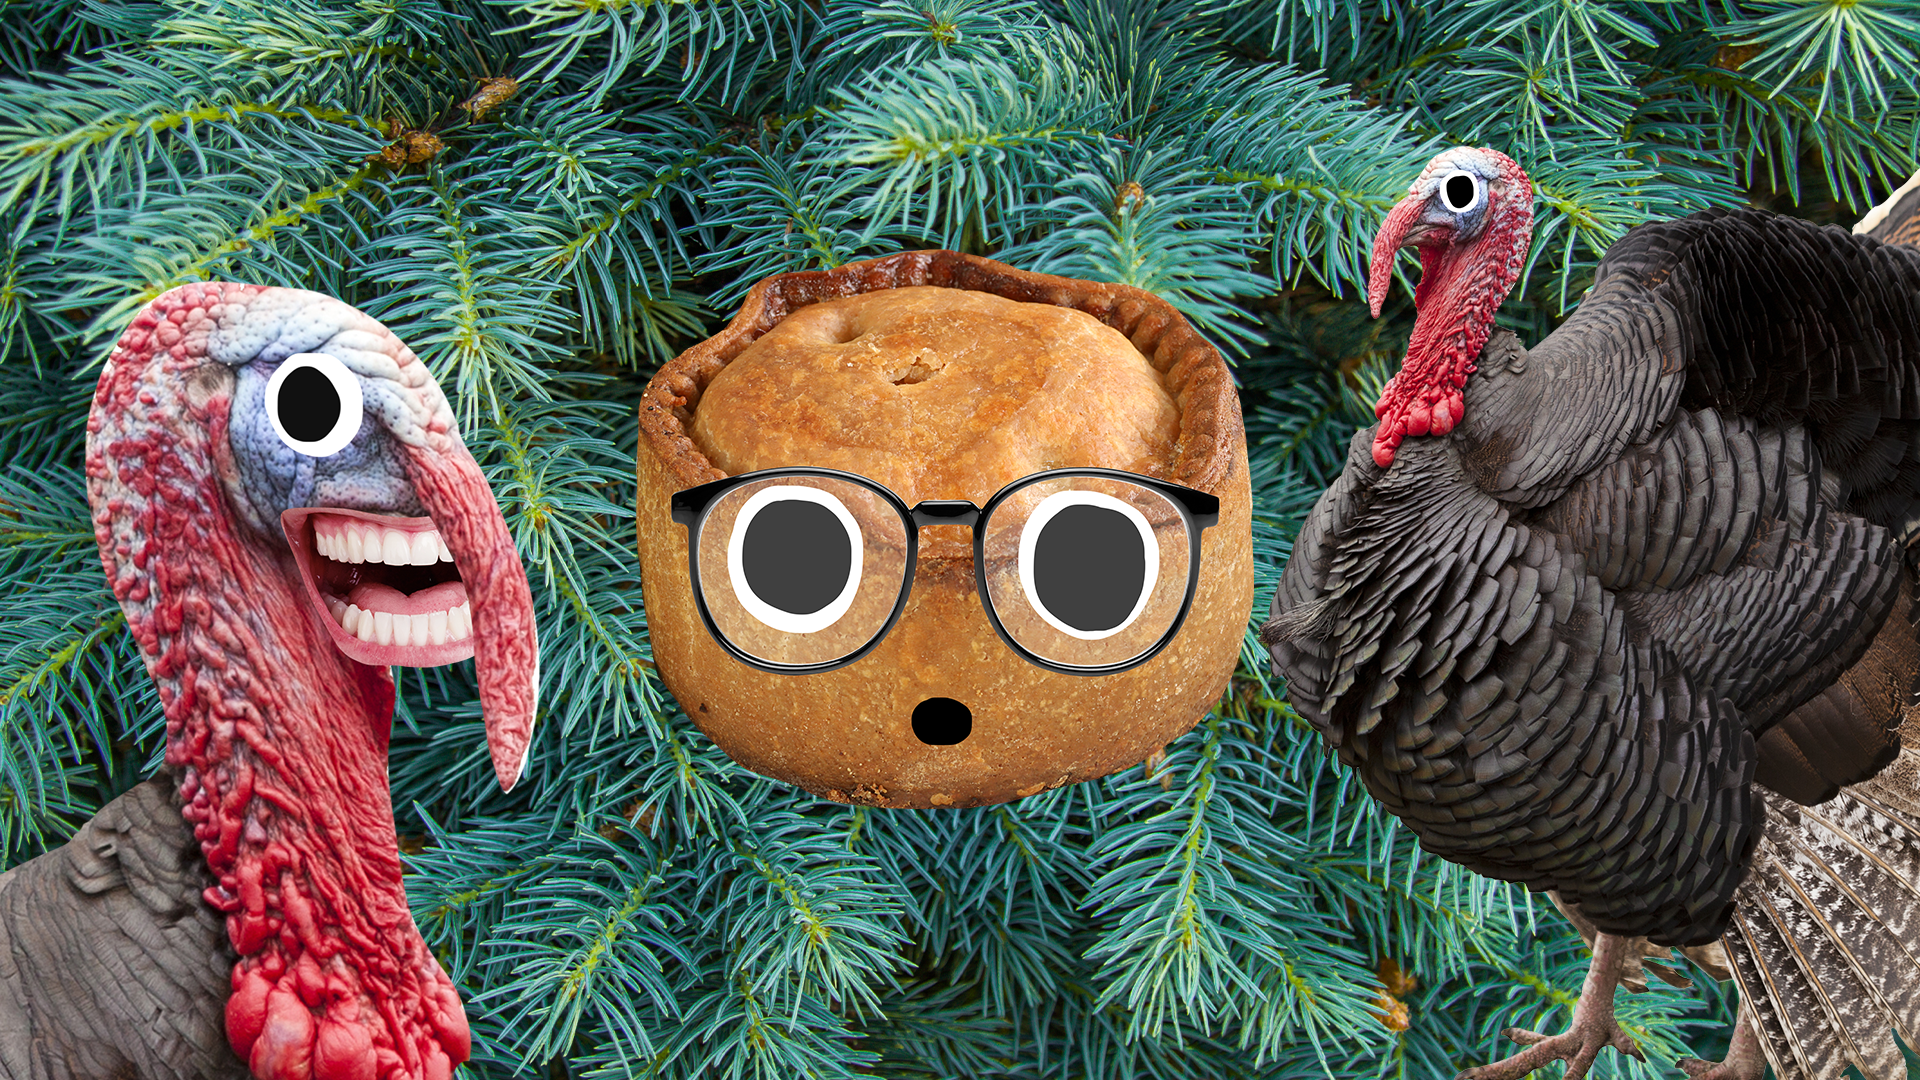 Beano turkeys and pie on fir tree background 